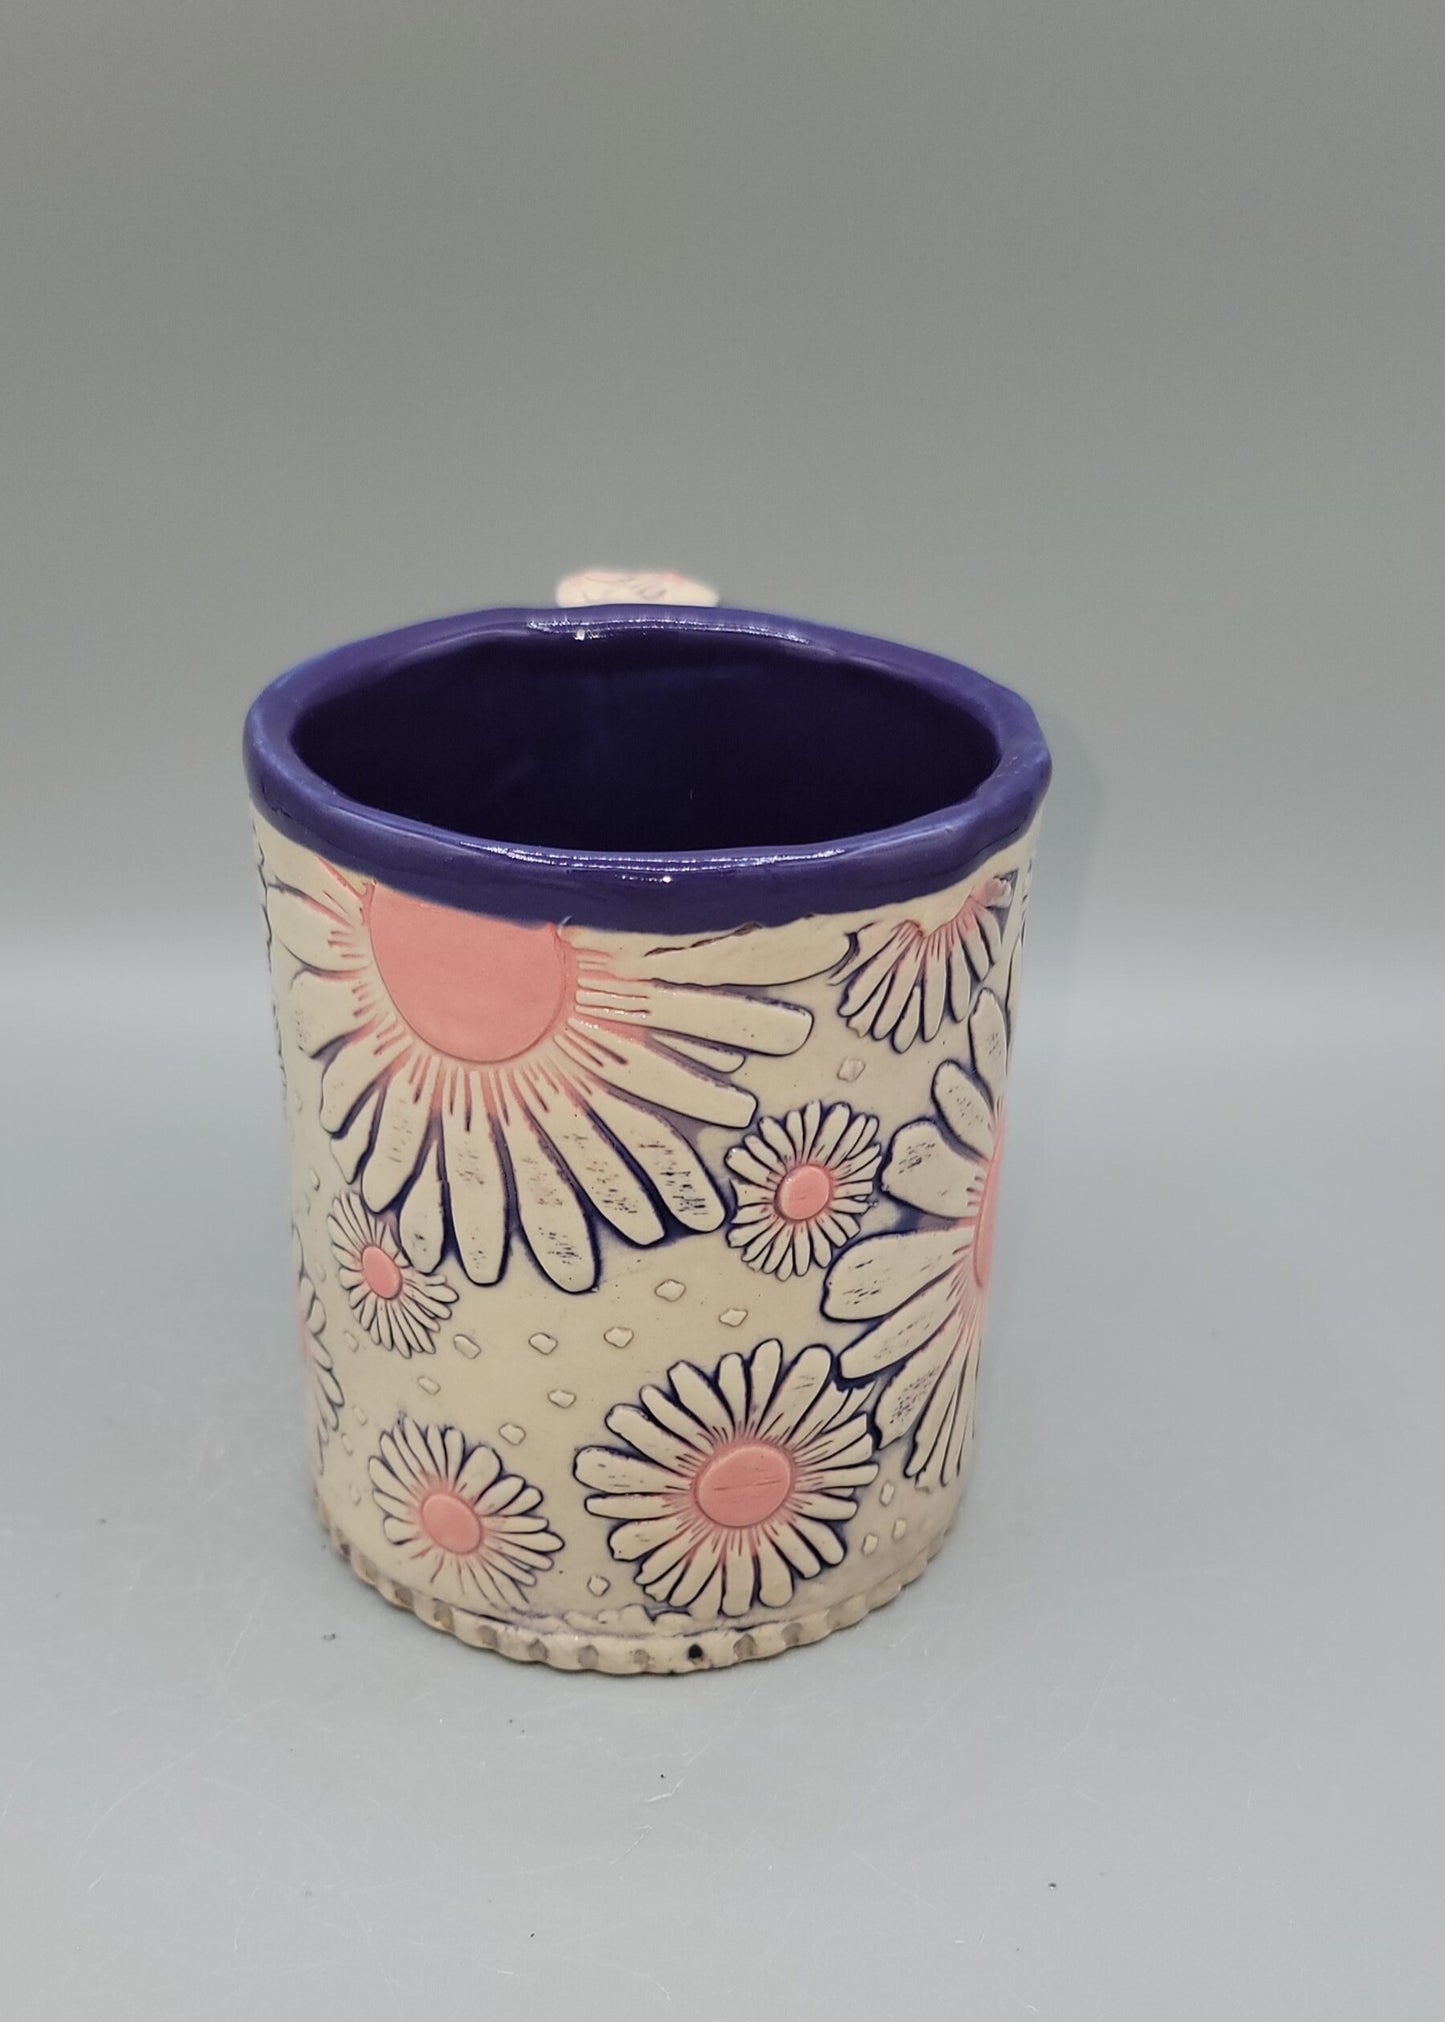 14-15oz Hand Painted, Embossed Purple Ombre Daisies Ceramic Mug